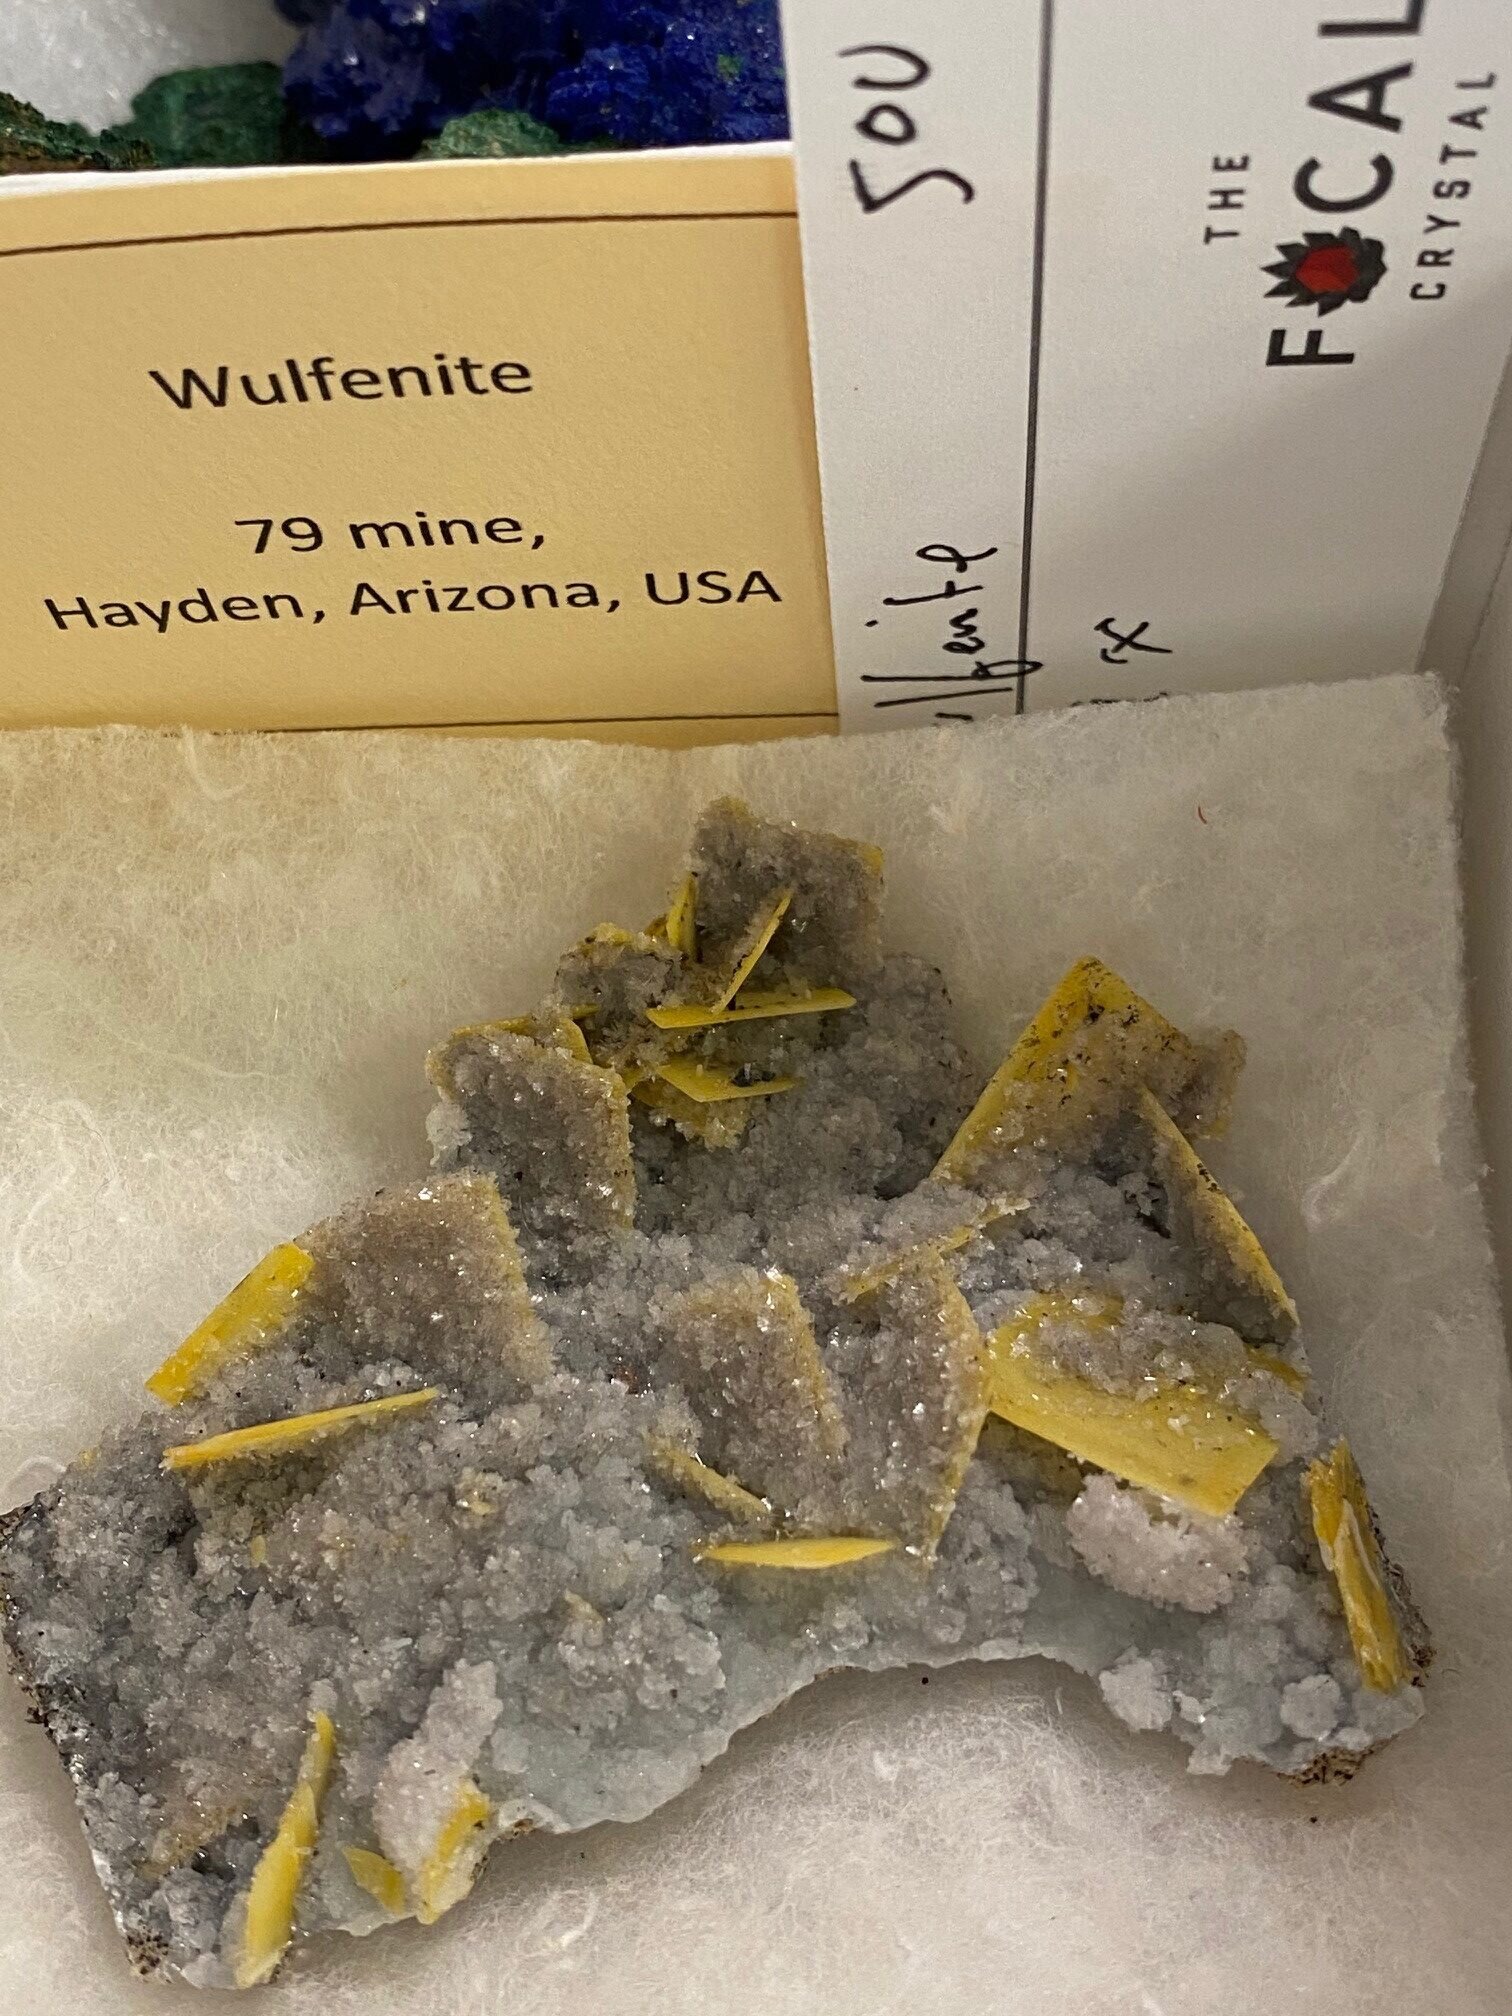 79 Mine wulfie – available